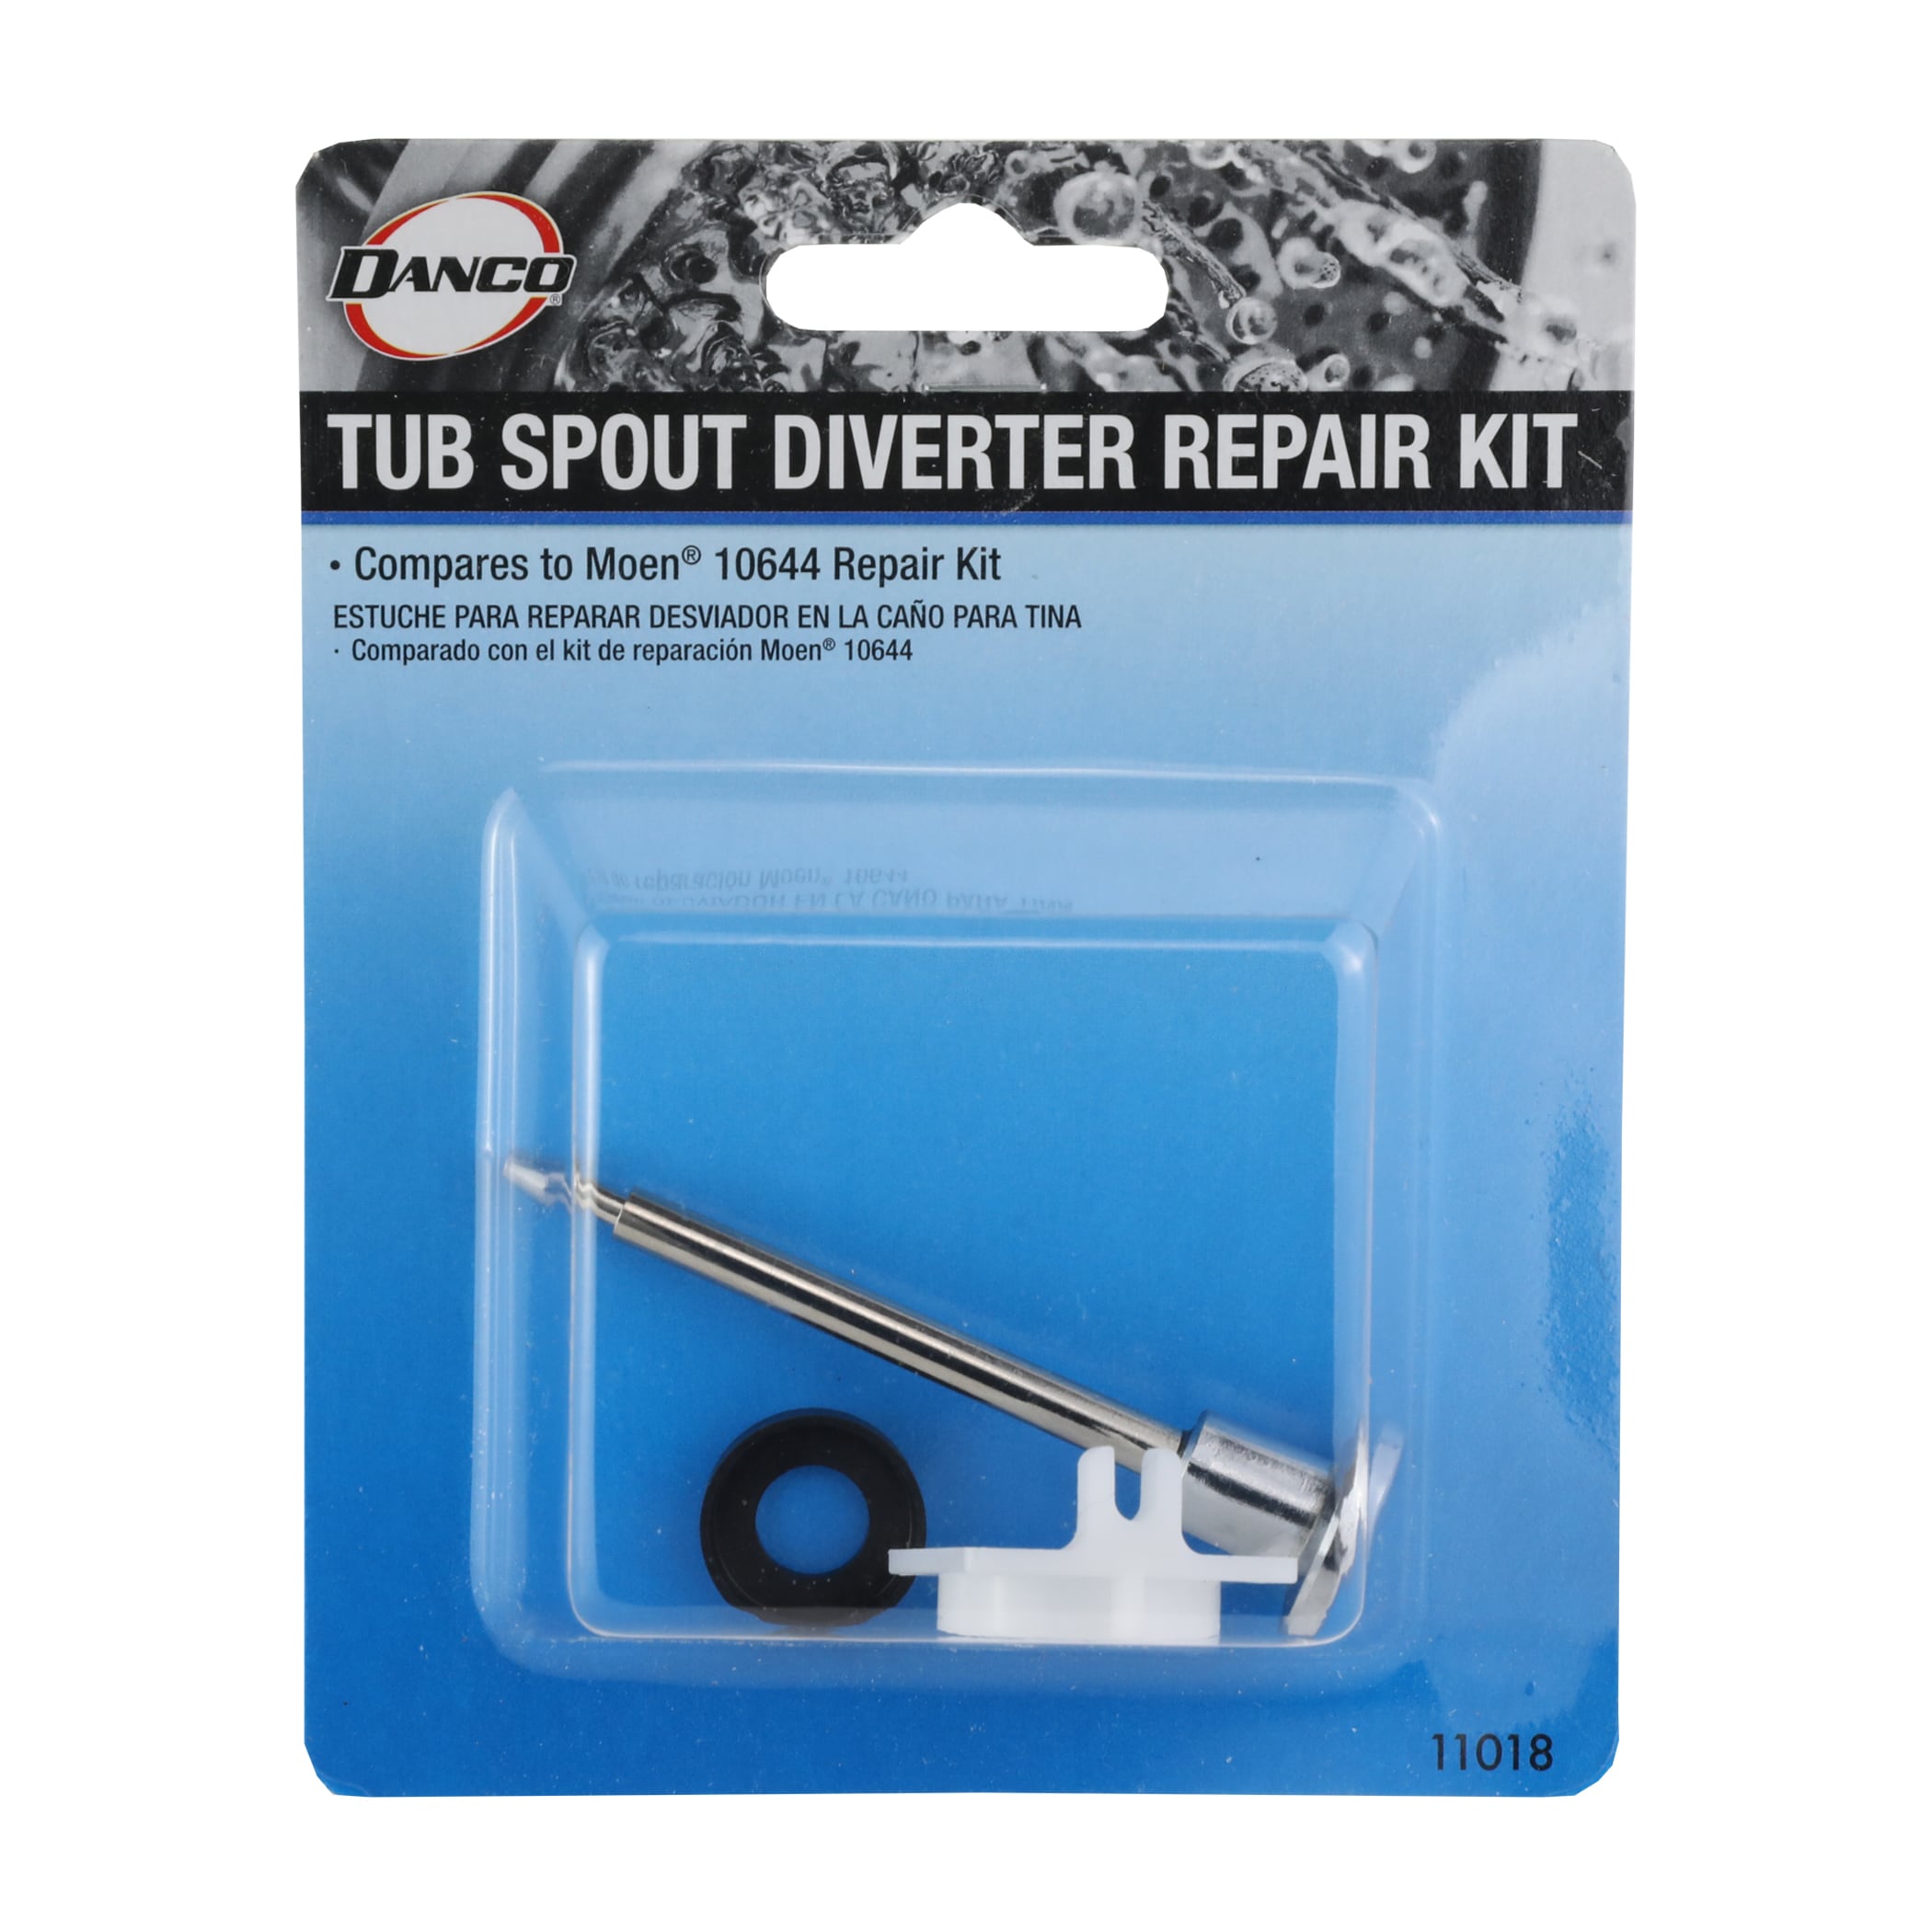 Bathtub and shower repair kit Bathtub Parts at